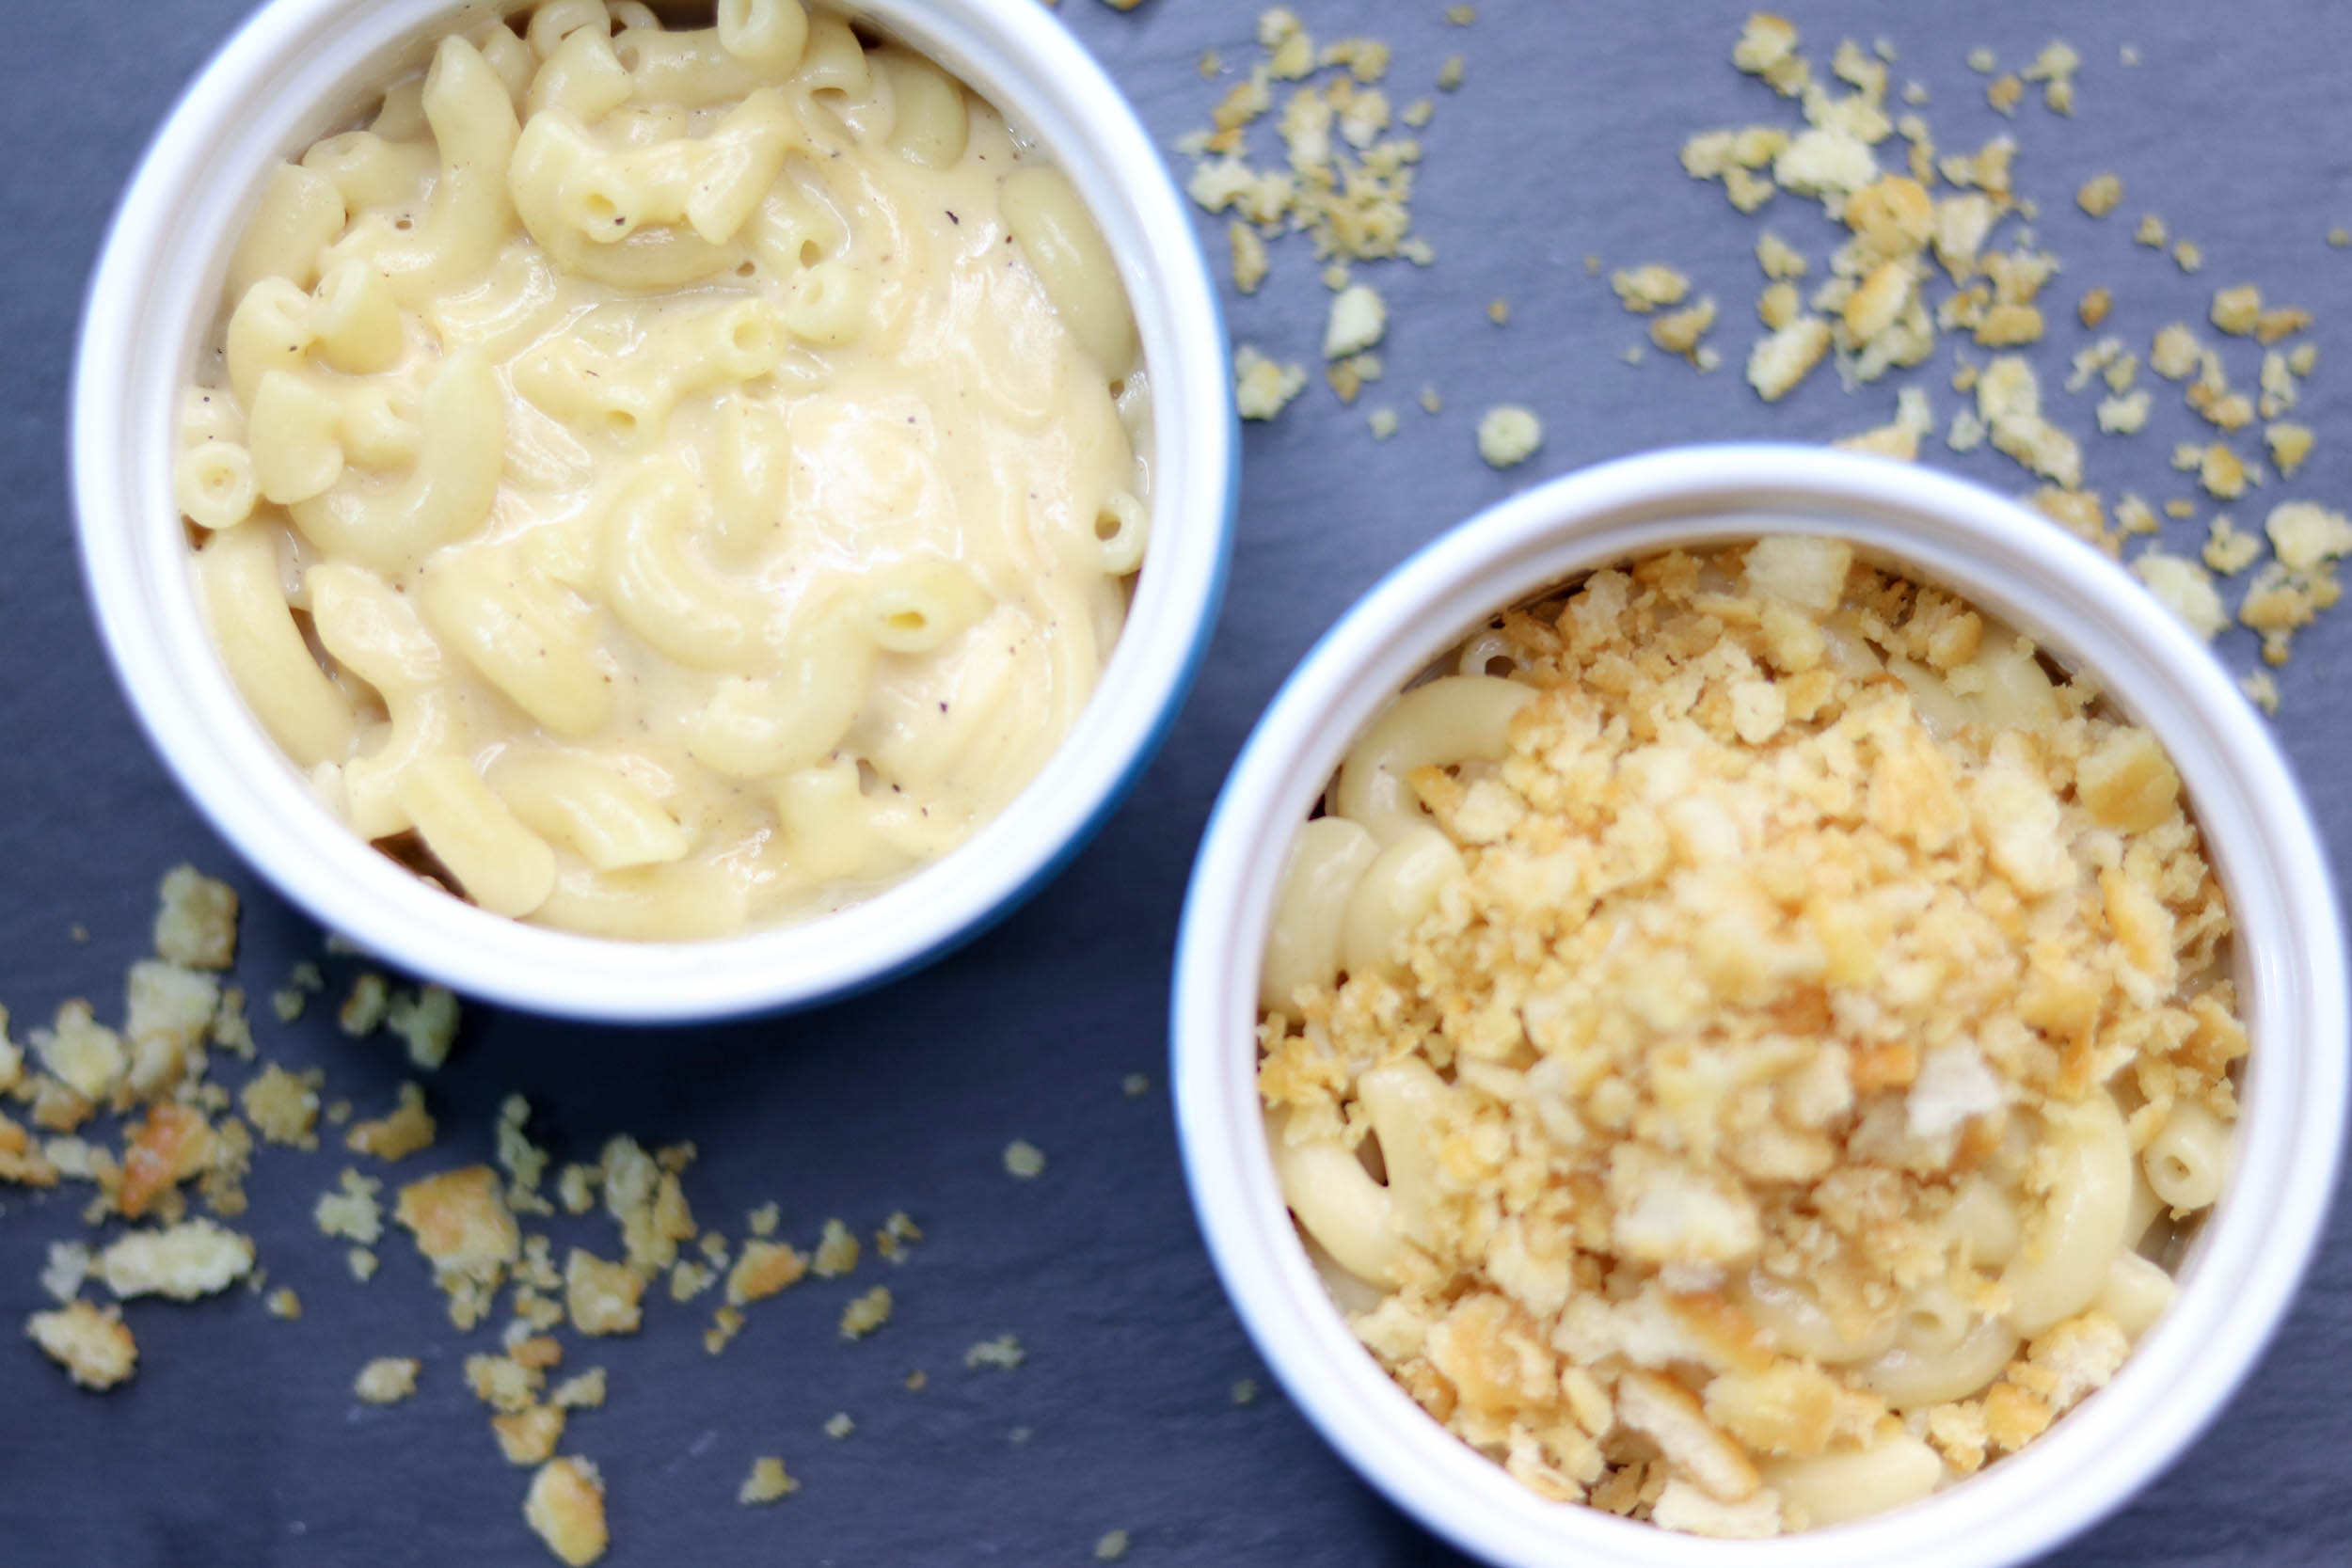 Four Cheese Macaroni and Cheese | Bianca Dottin